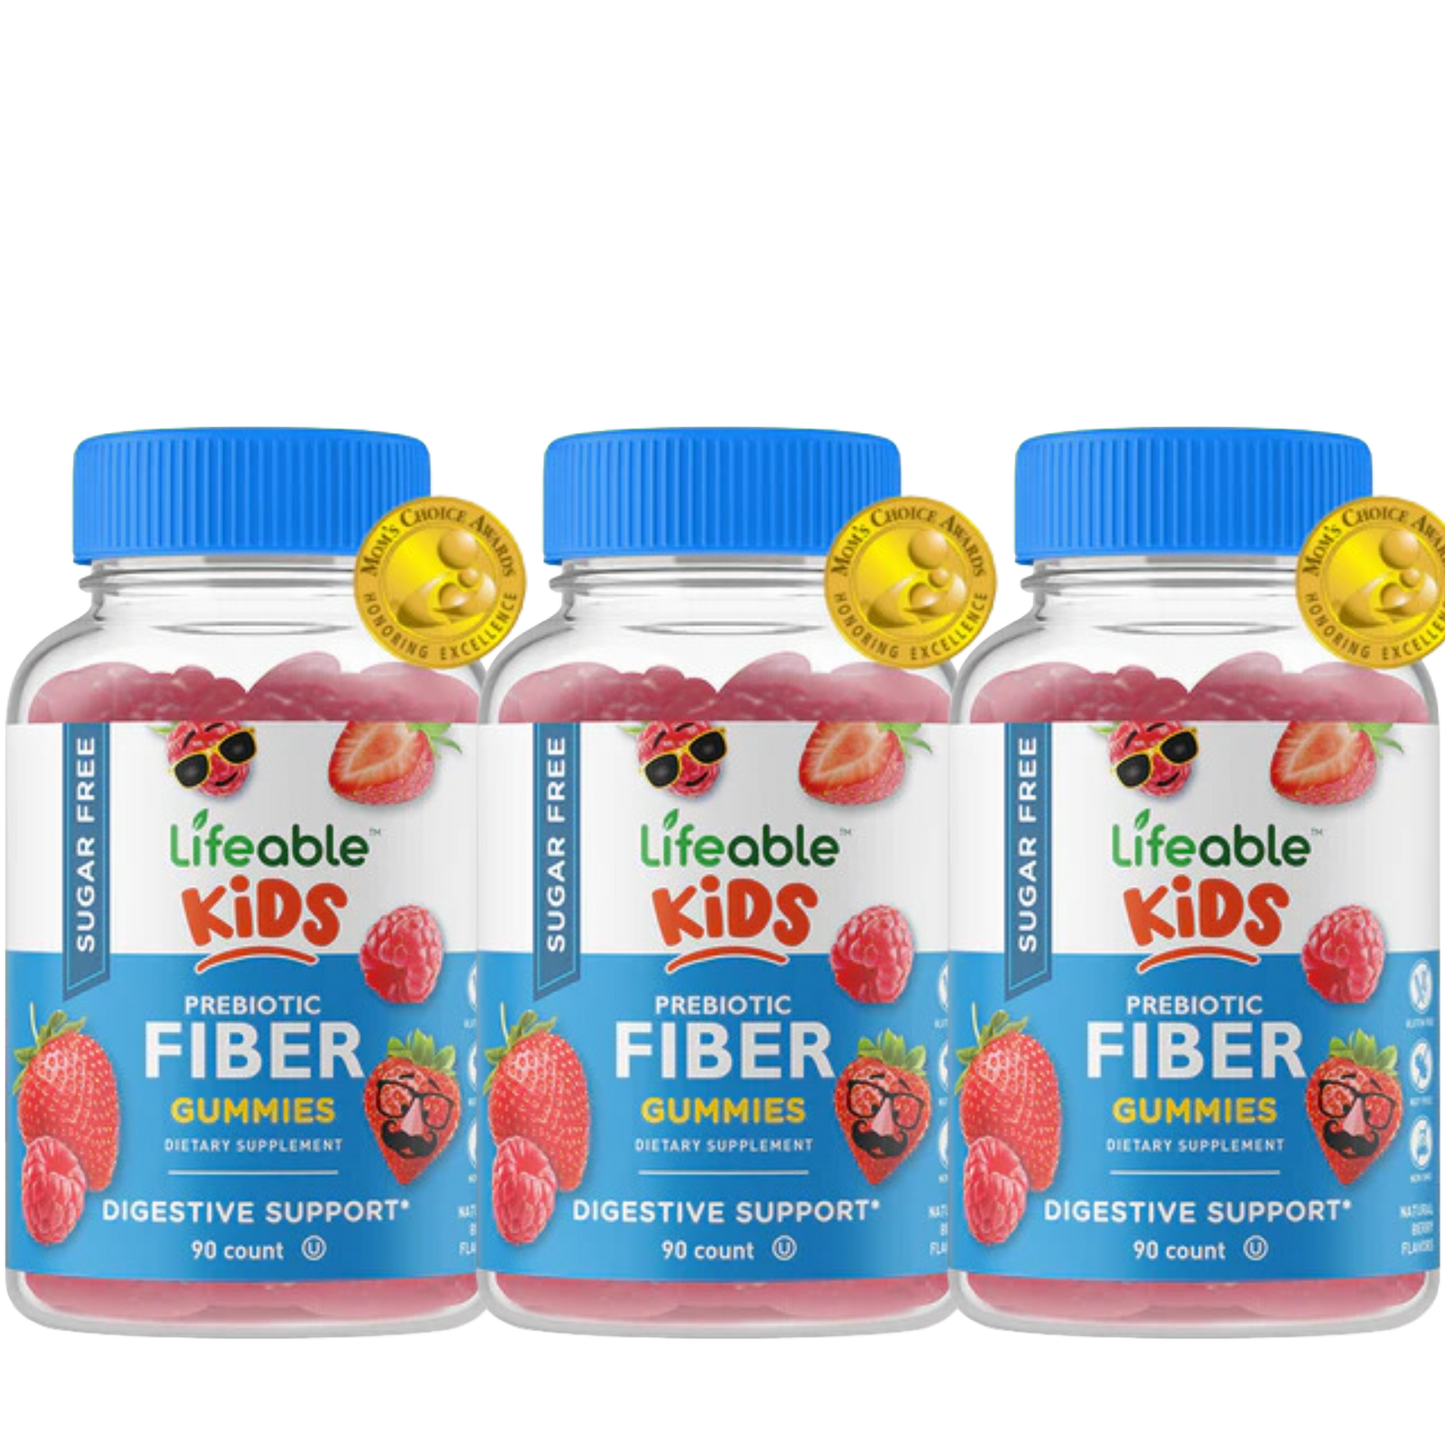 Sugar Free Prebiotic Fiber Gummies for Kids